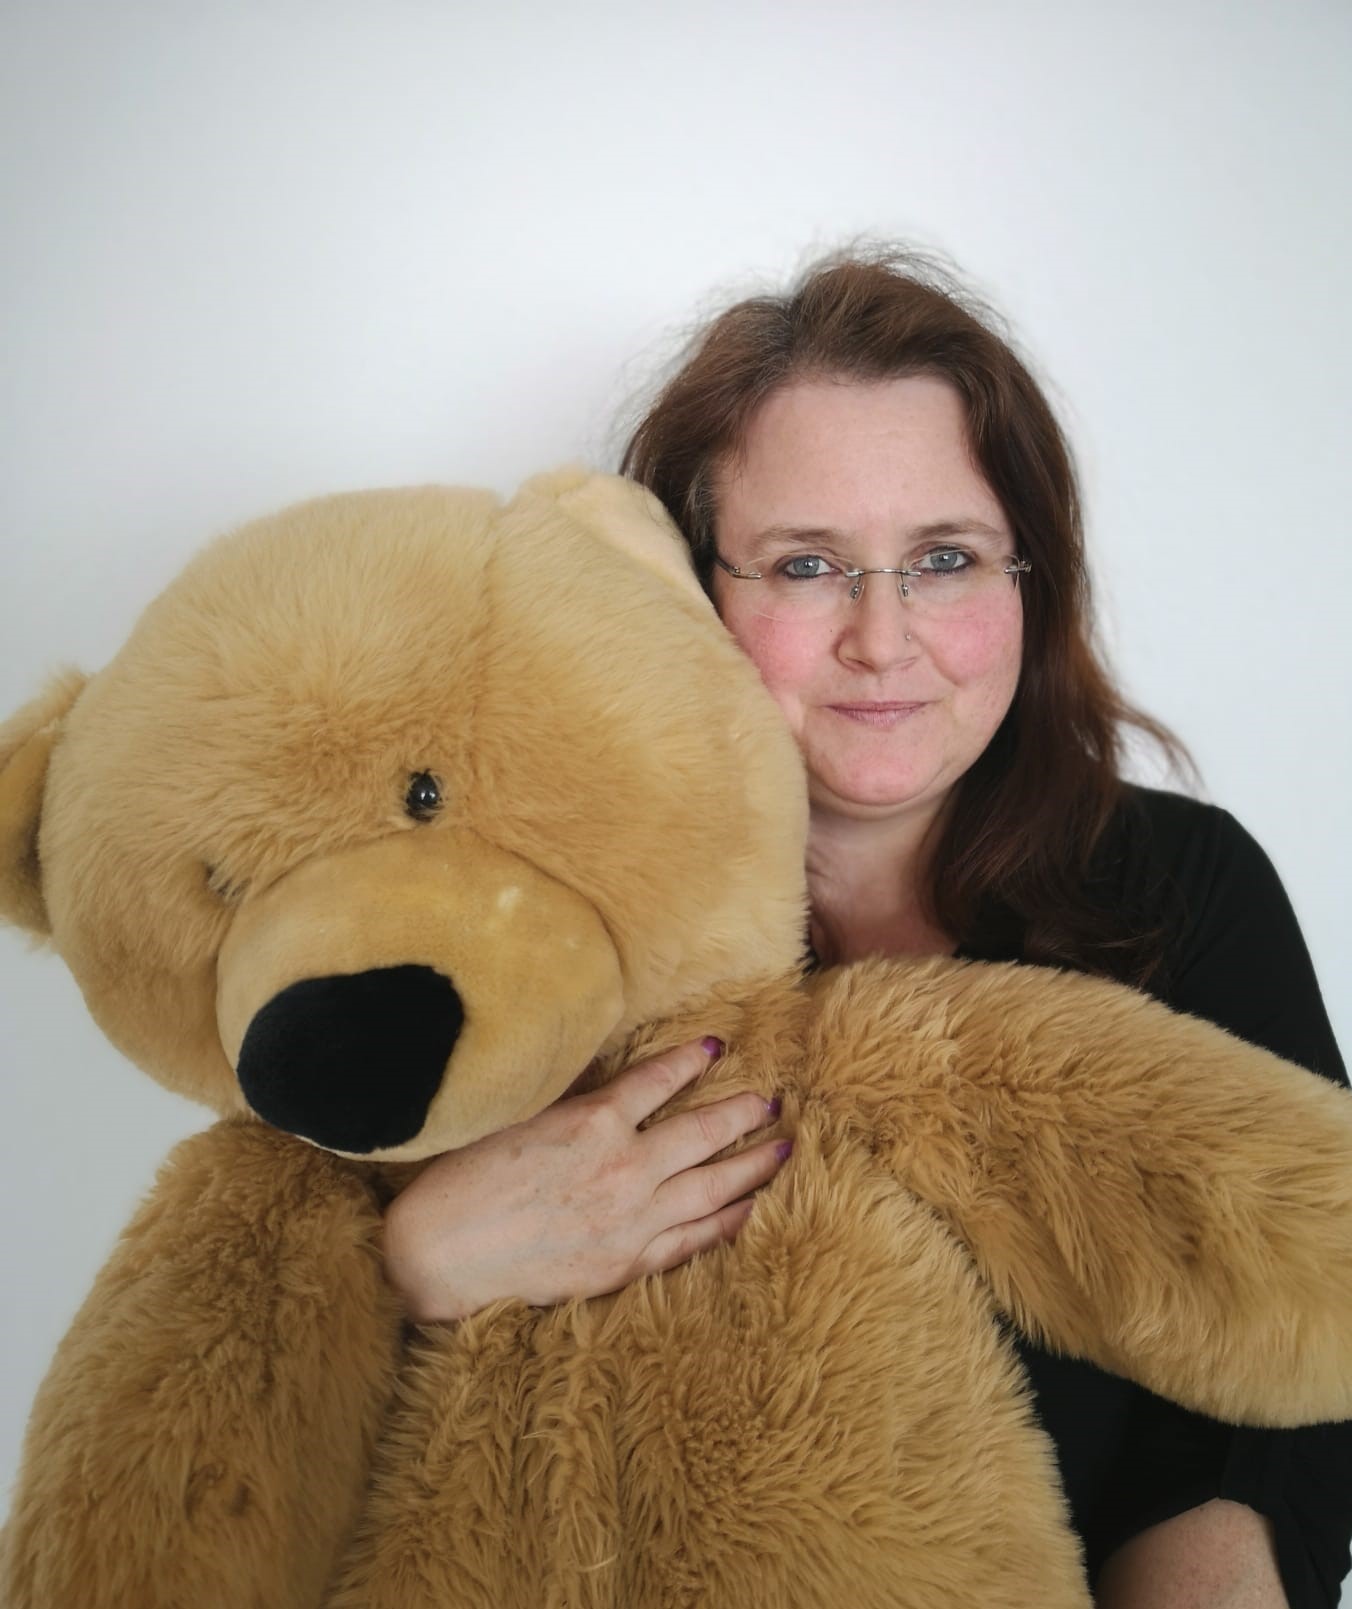 Teddybär bärenstarke Kinderbetreuung AG - Wer sind wir